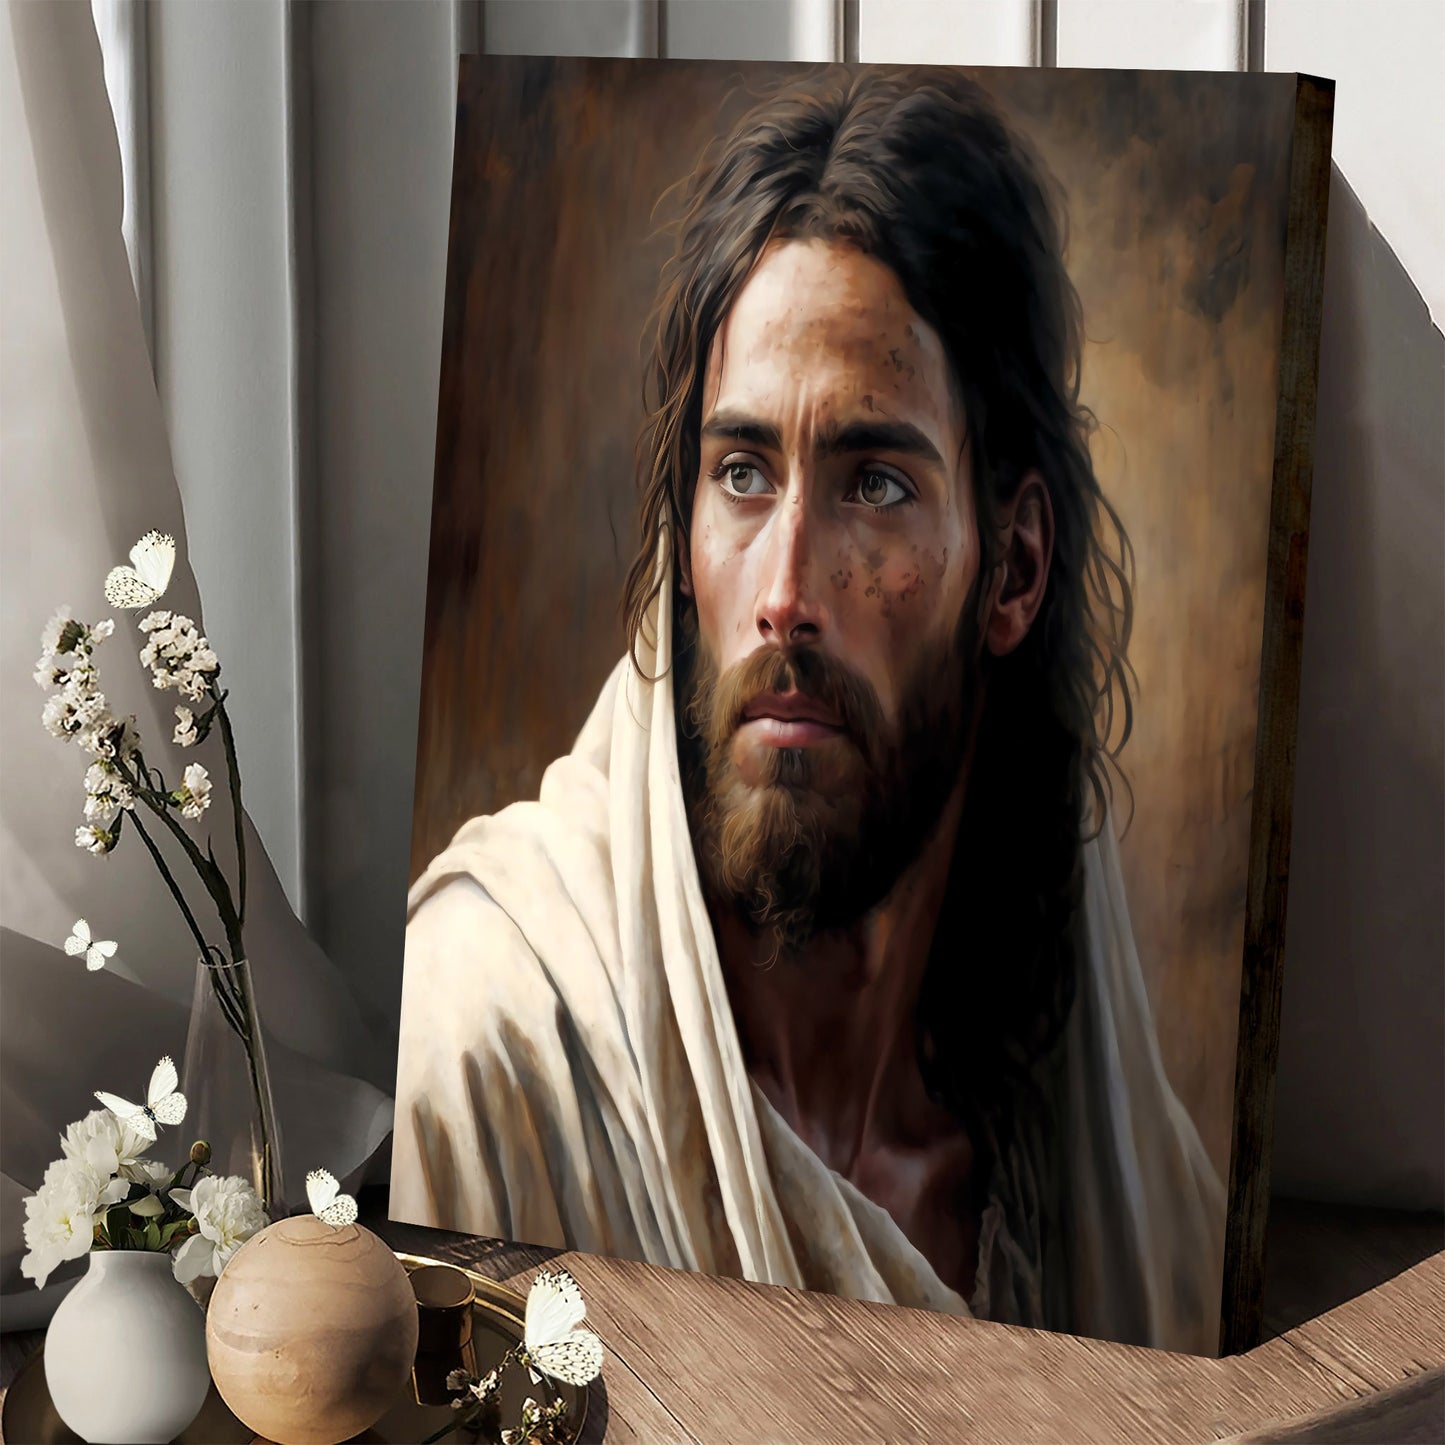 Jesus Christ Portrait - Jesus Canvas Art - Christian Wall Art